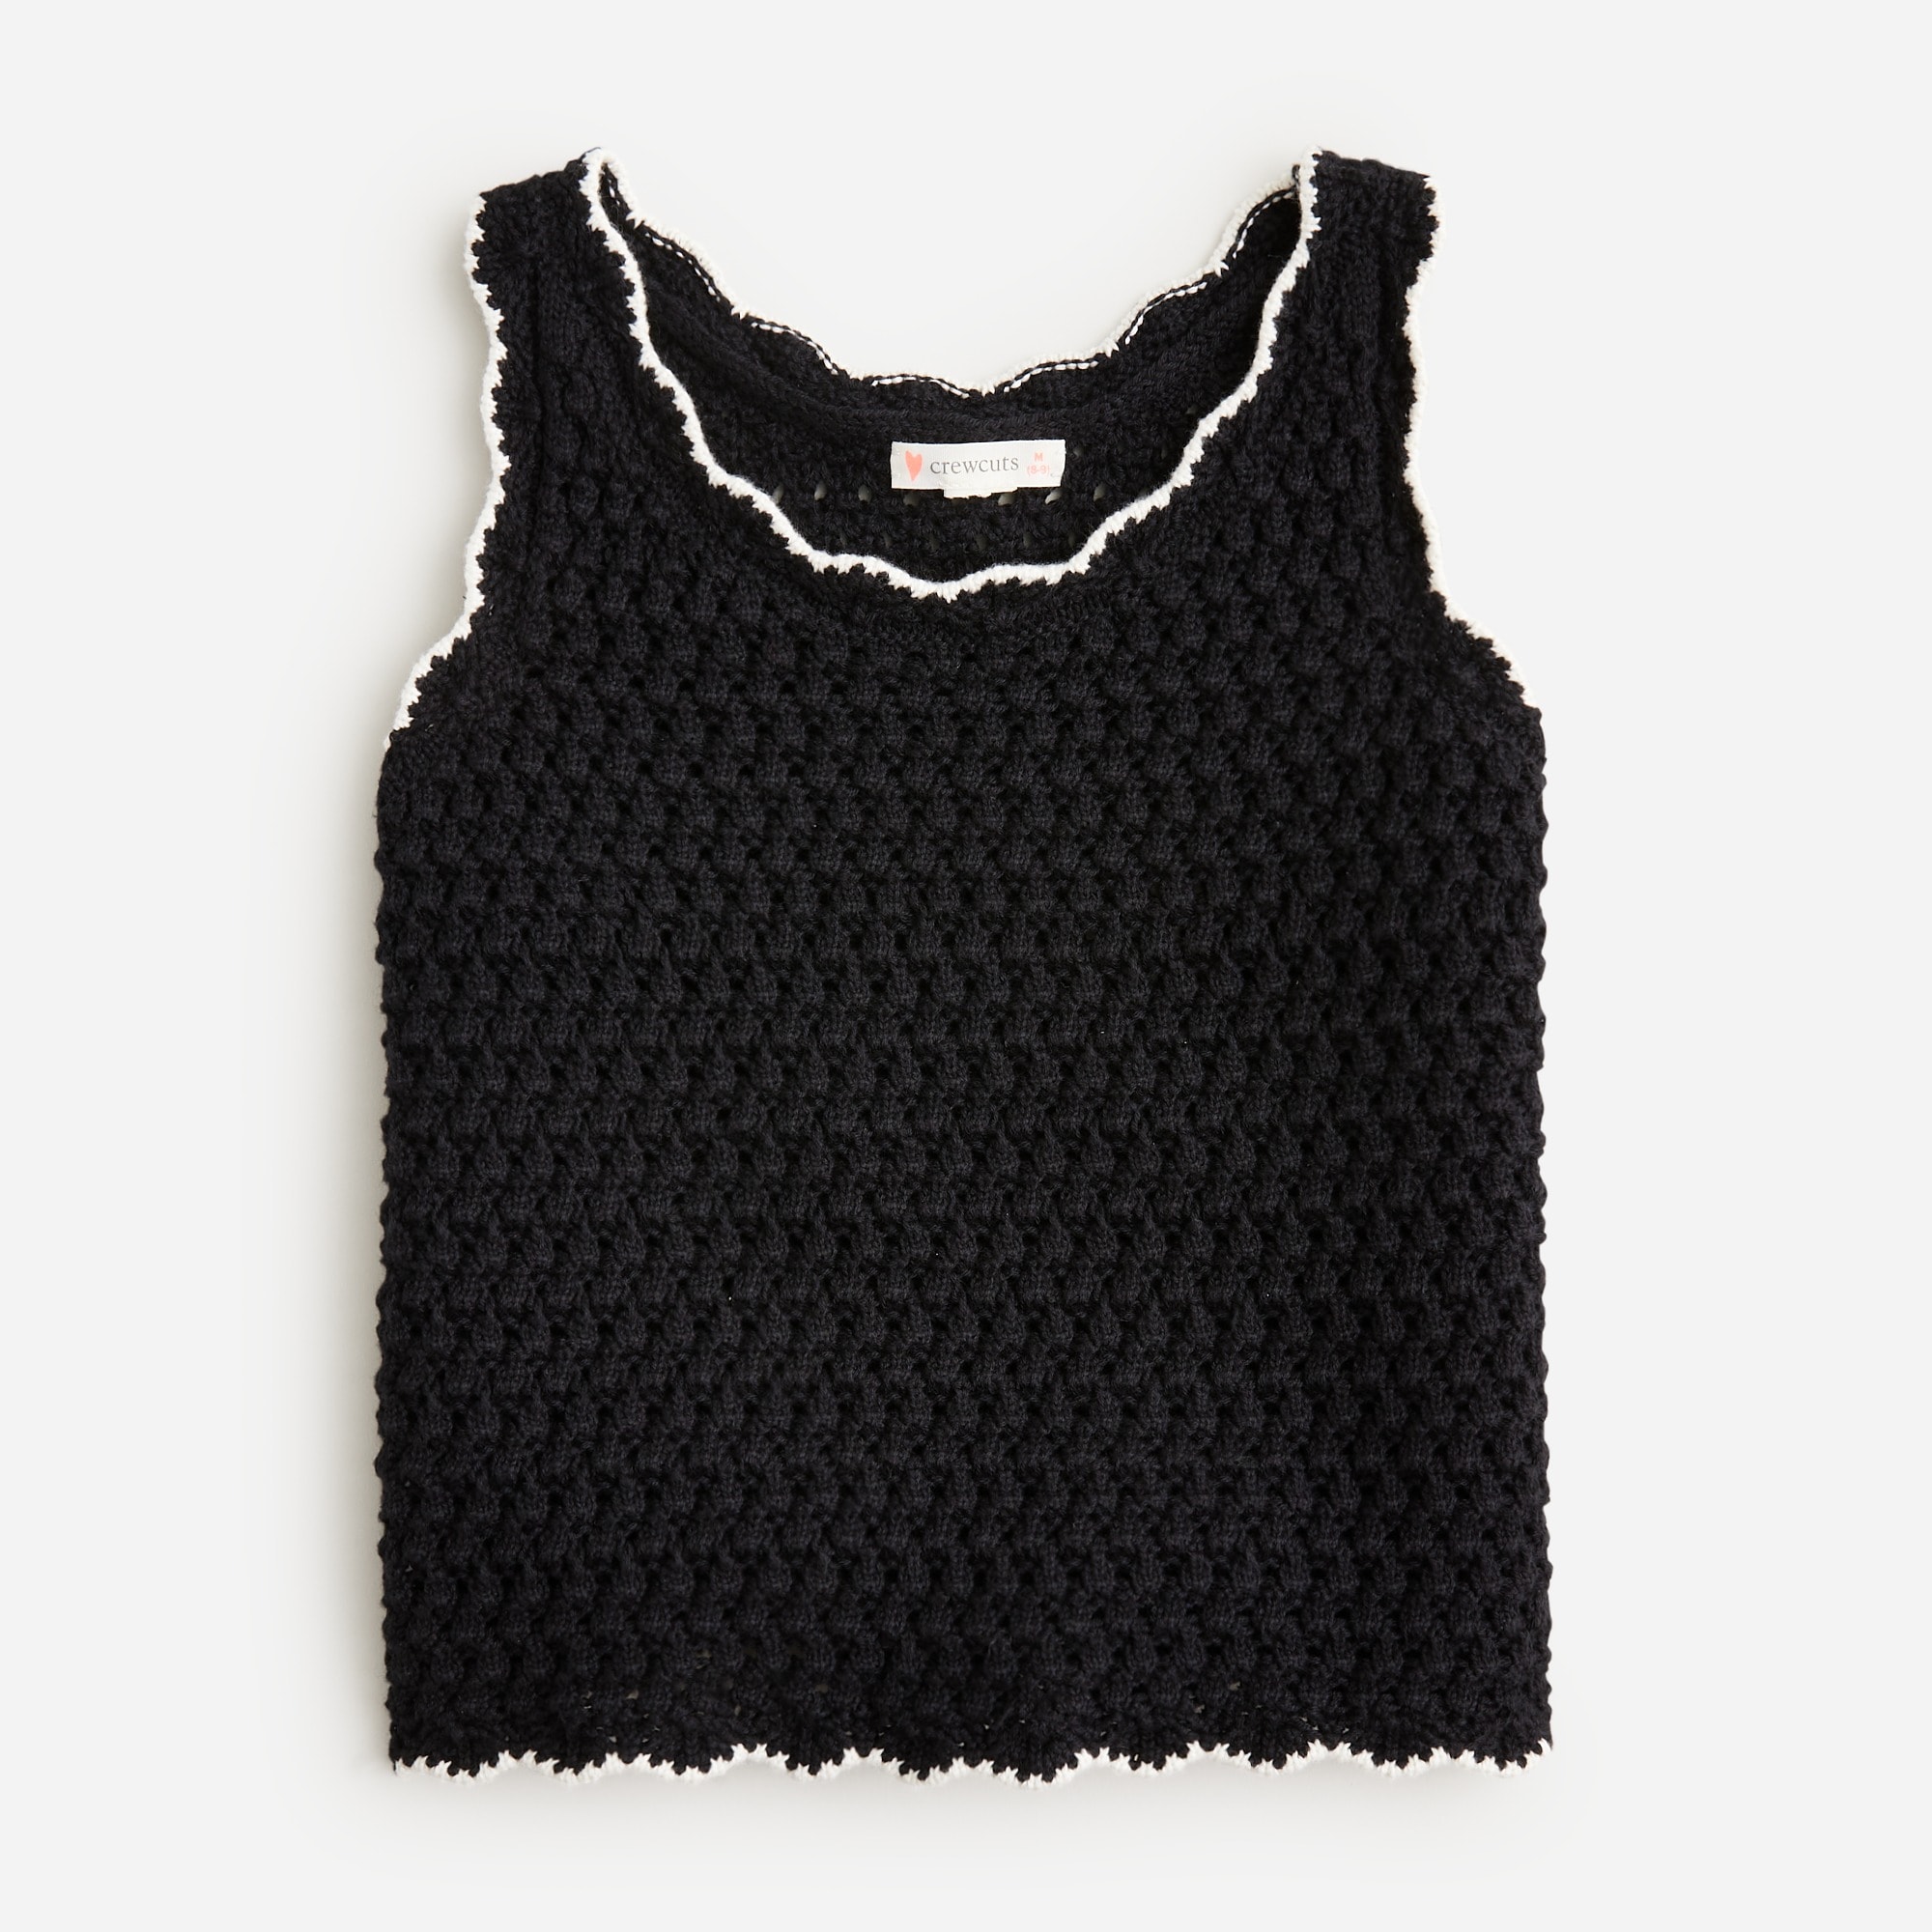  Girls' crochet tank top